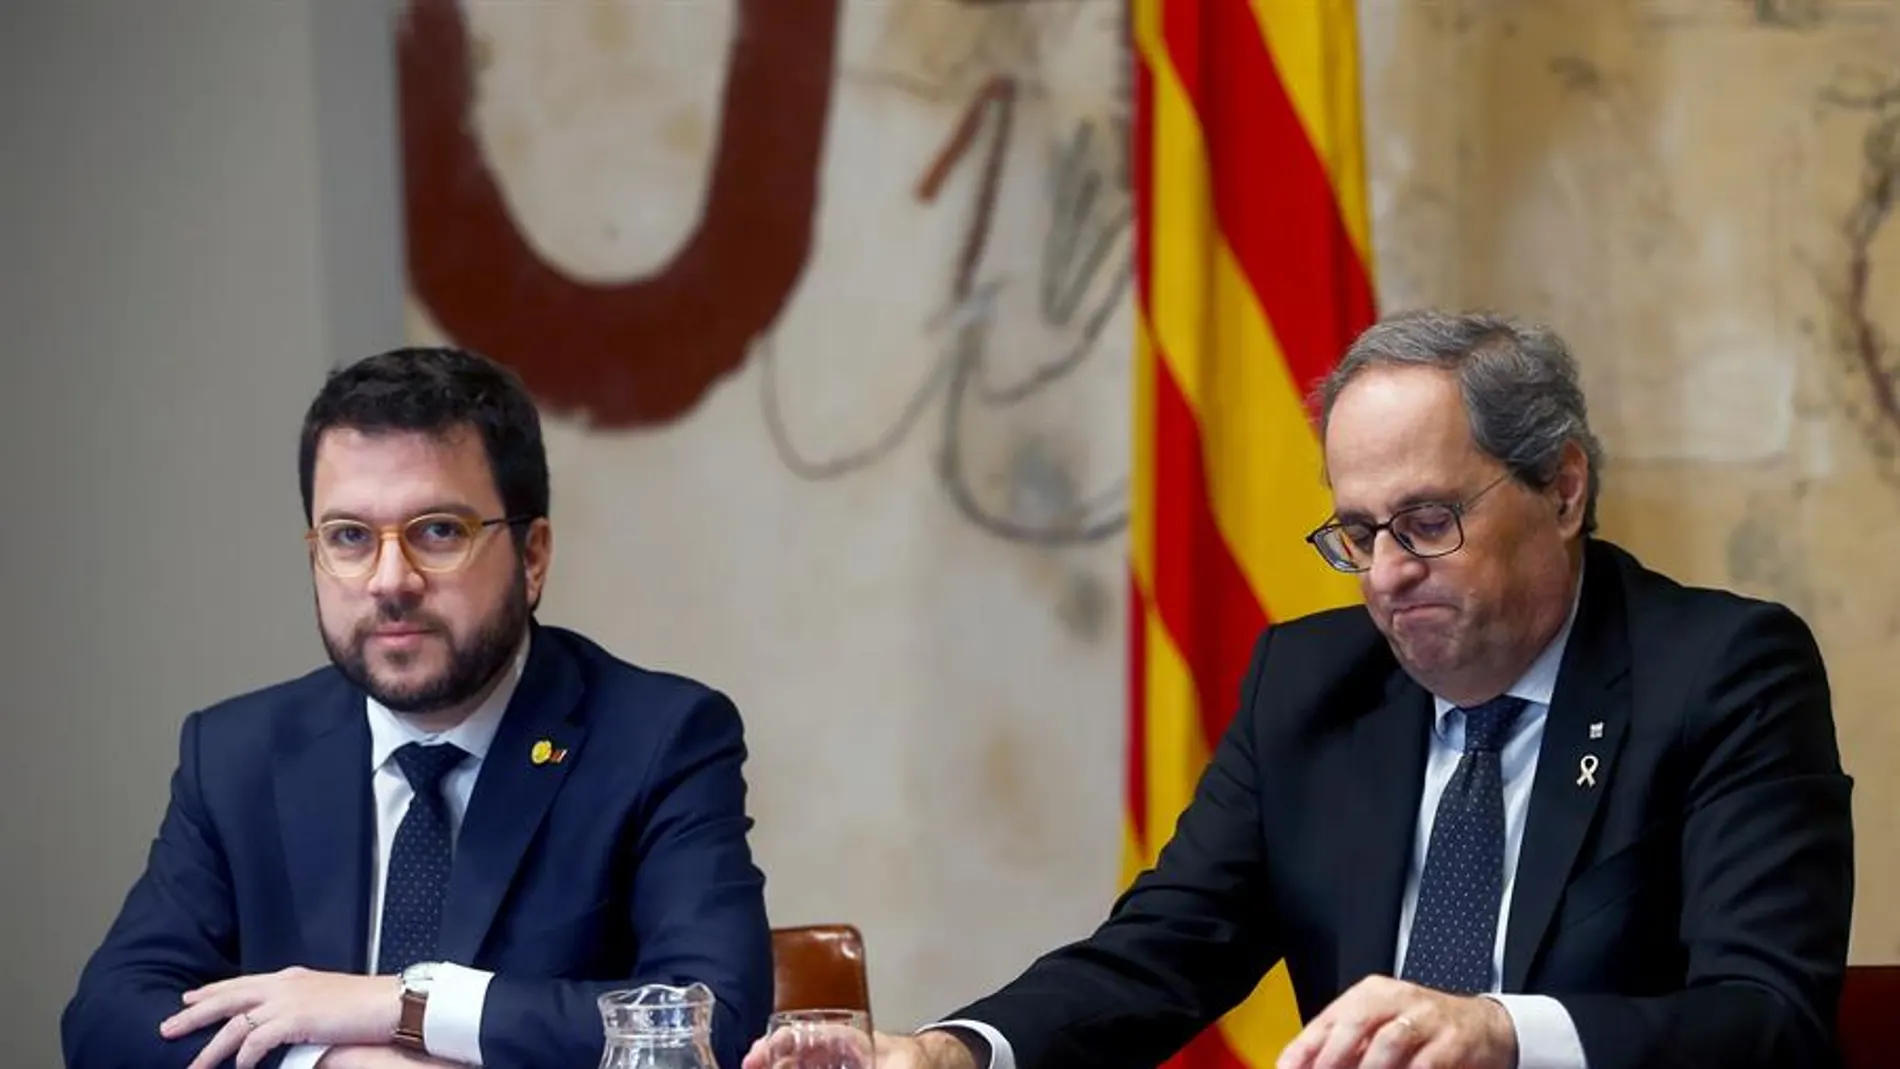 Pere Aragonès y Quim Torra en una reunión del Govern